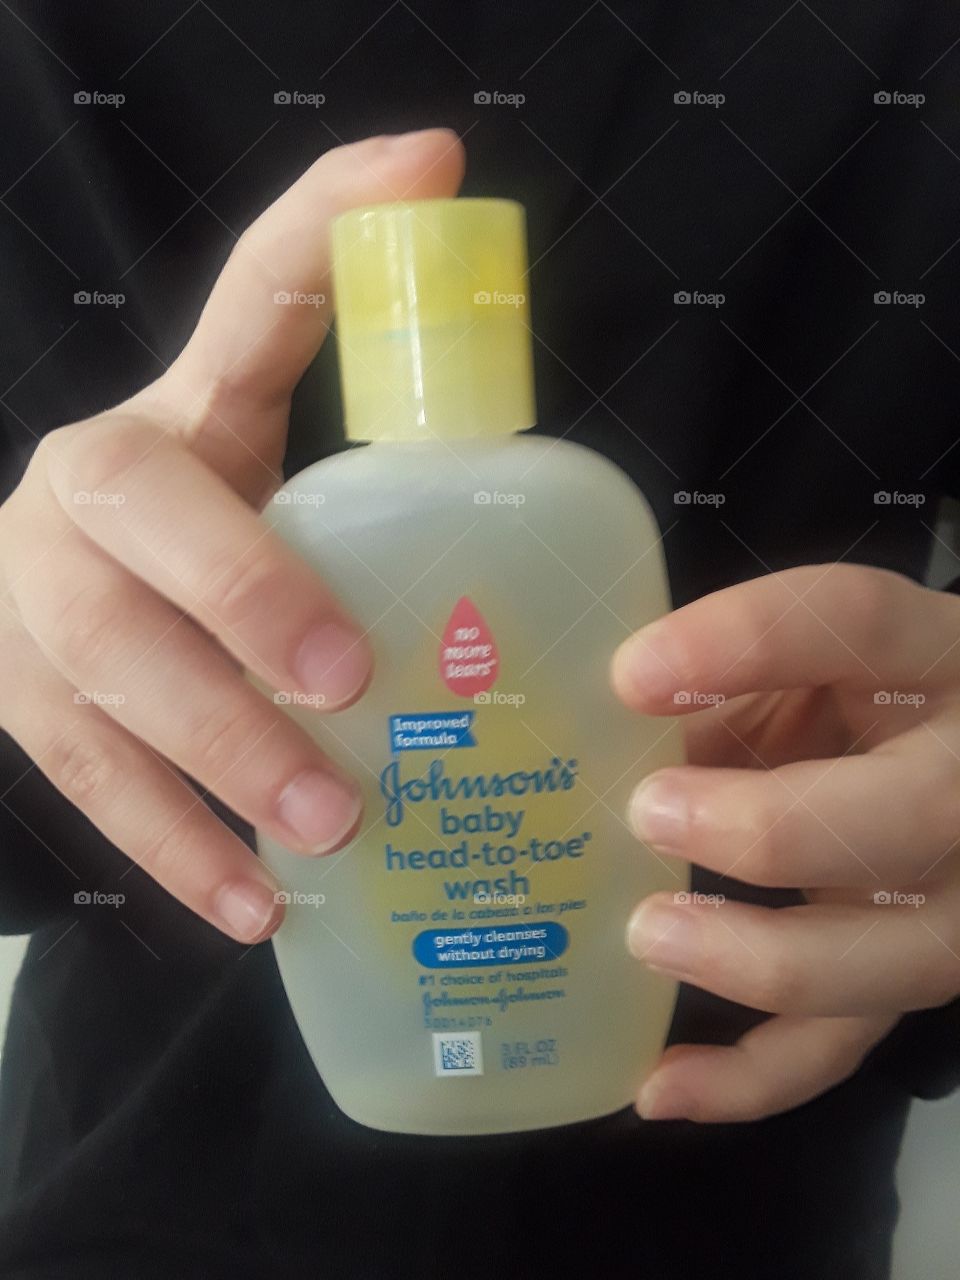 Hands Holding Johnson's Baby Wash Bottle